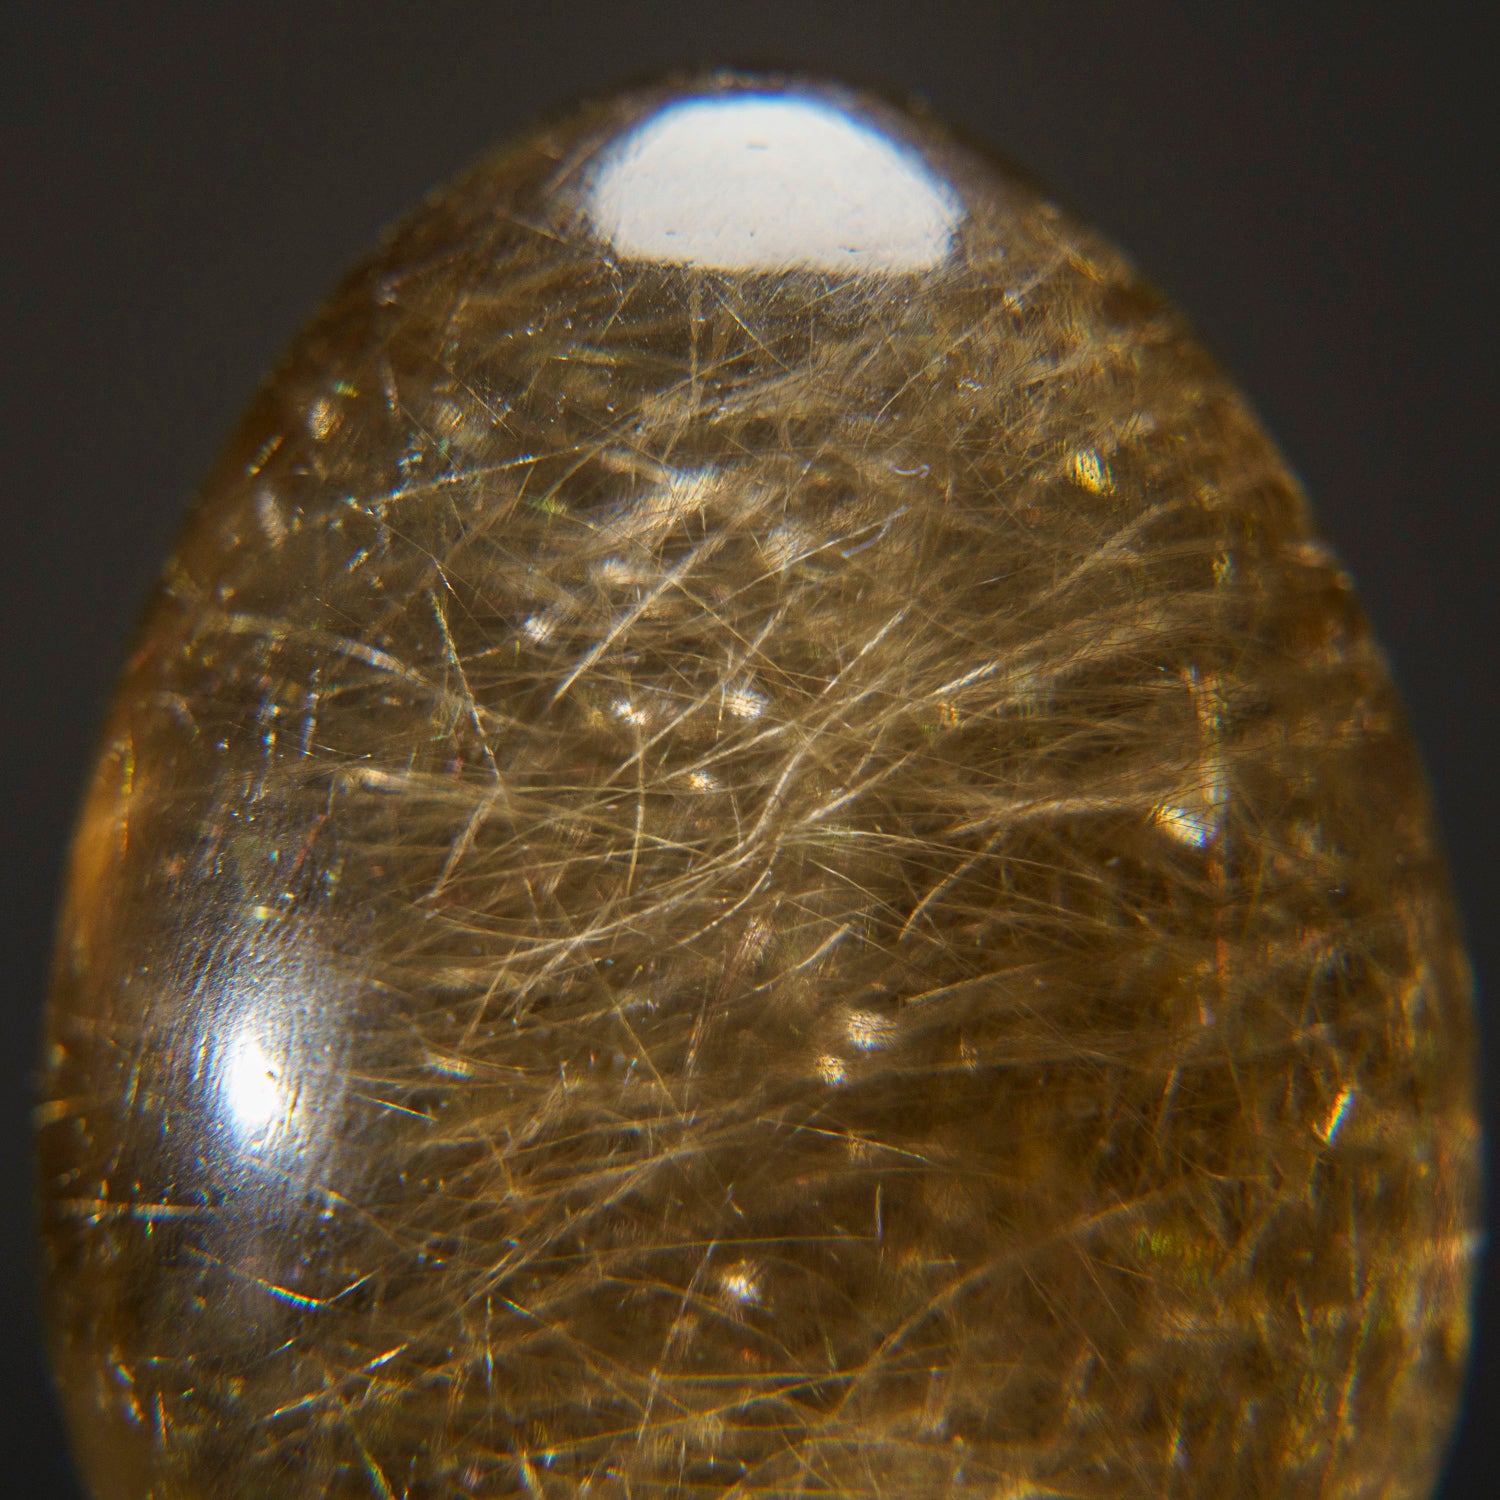 Genuine Polished Rutile Smoky Quartz Egg from Brazil (221.9 grams)